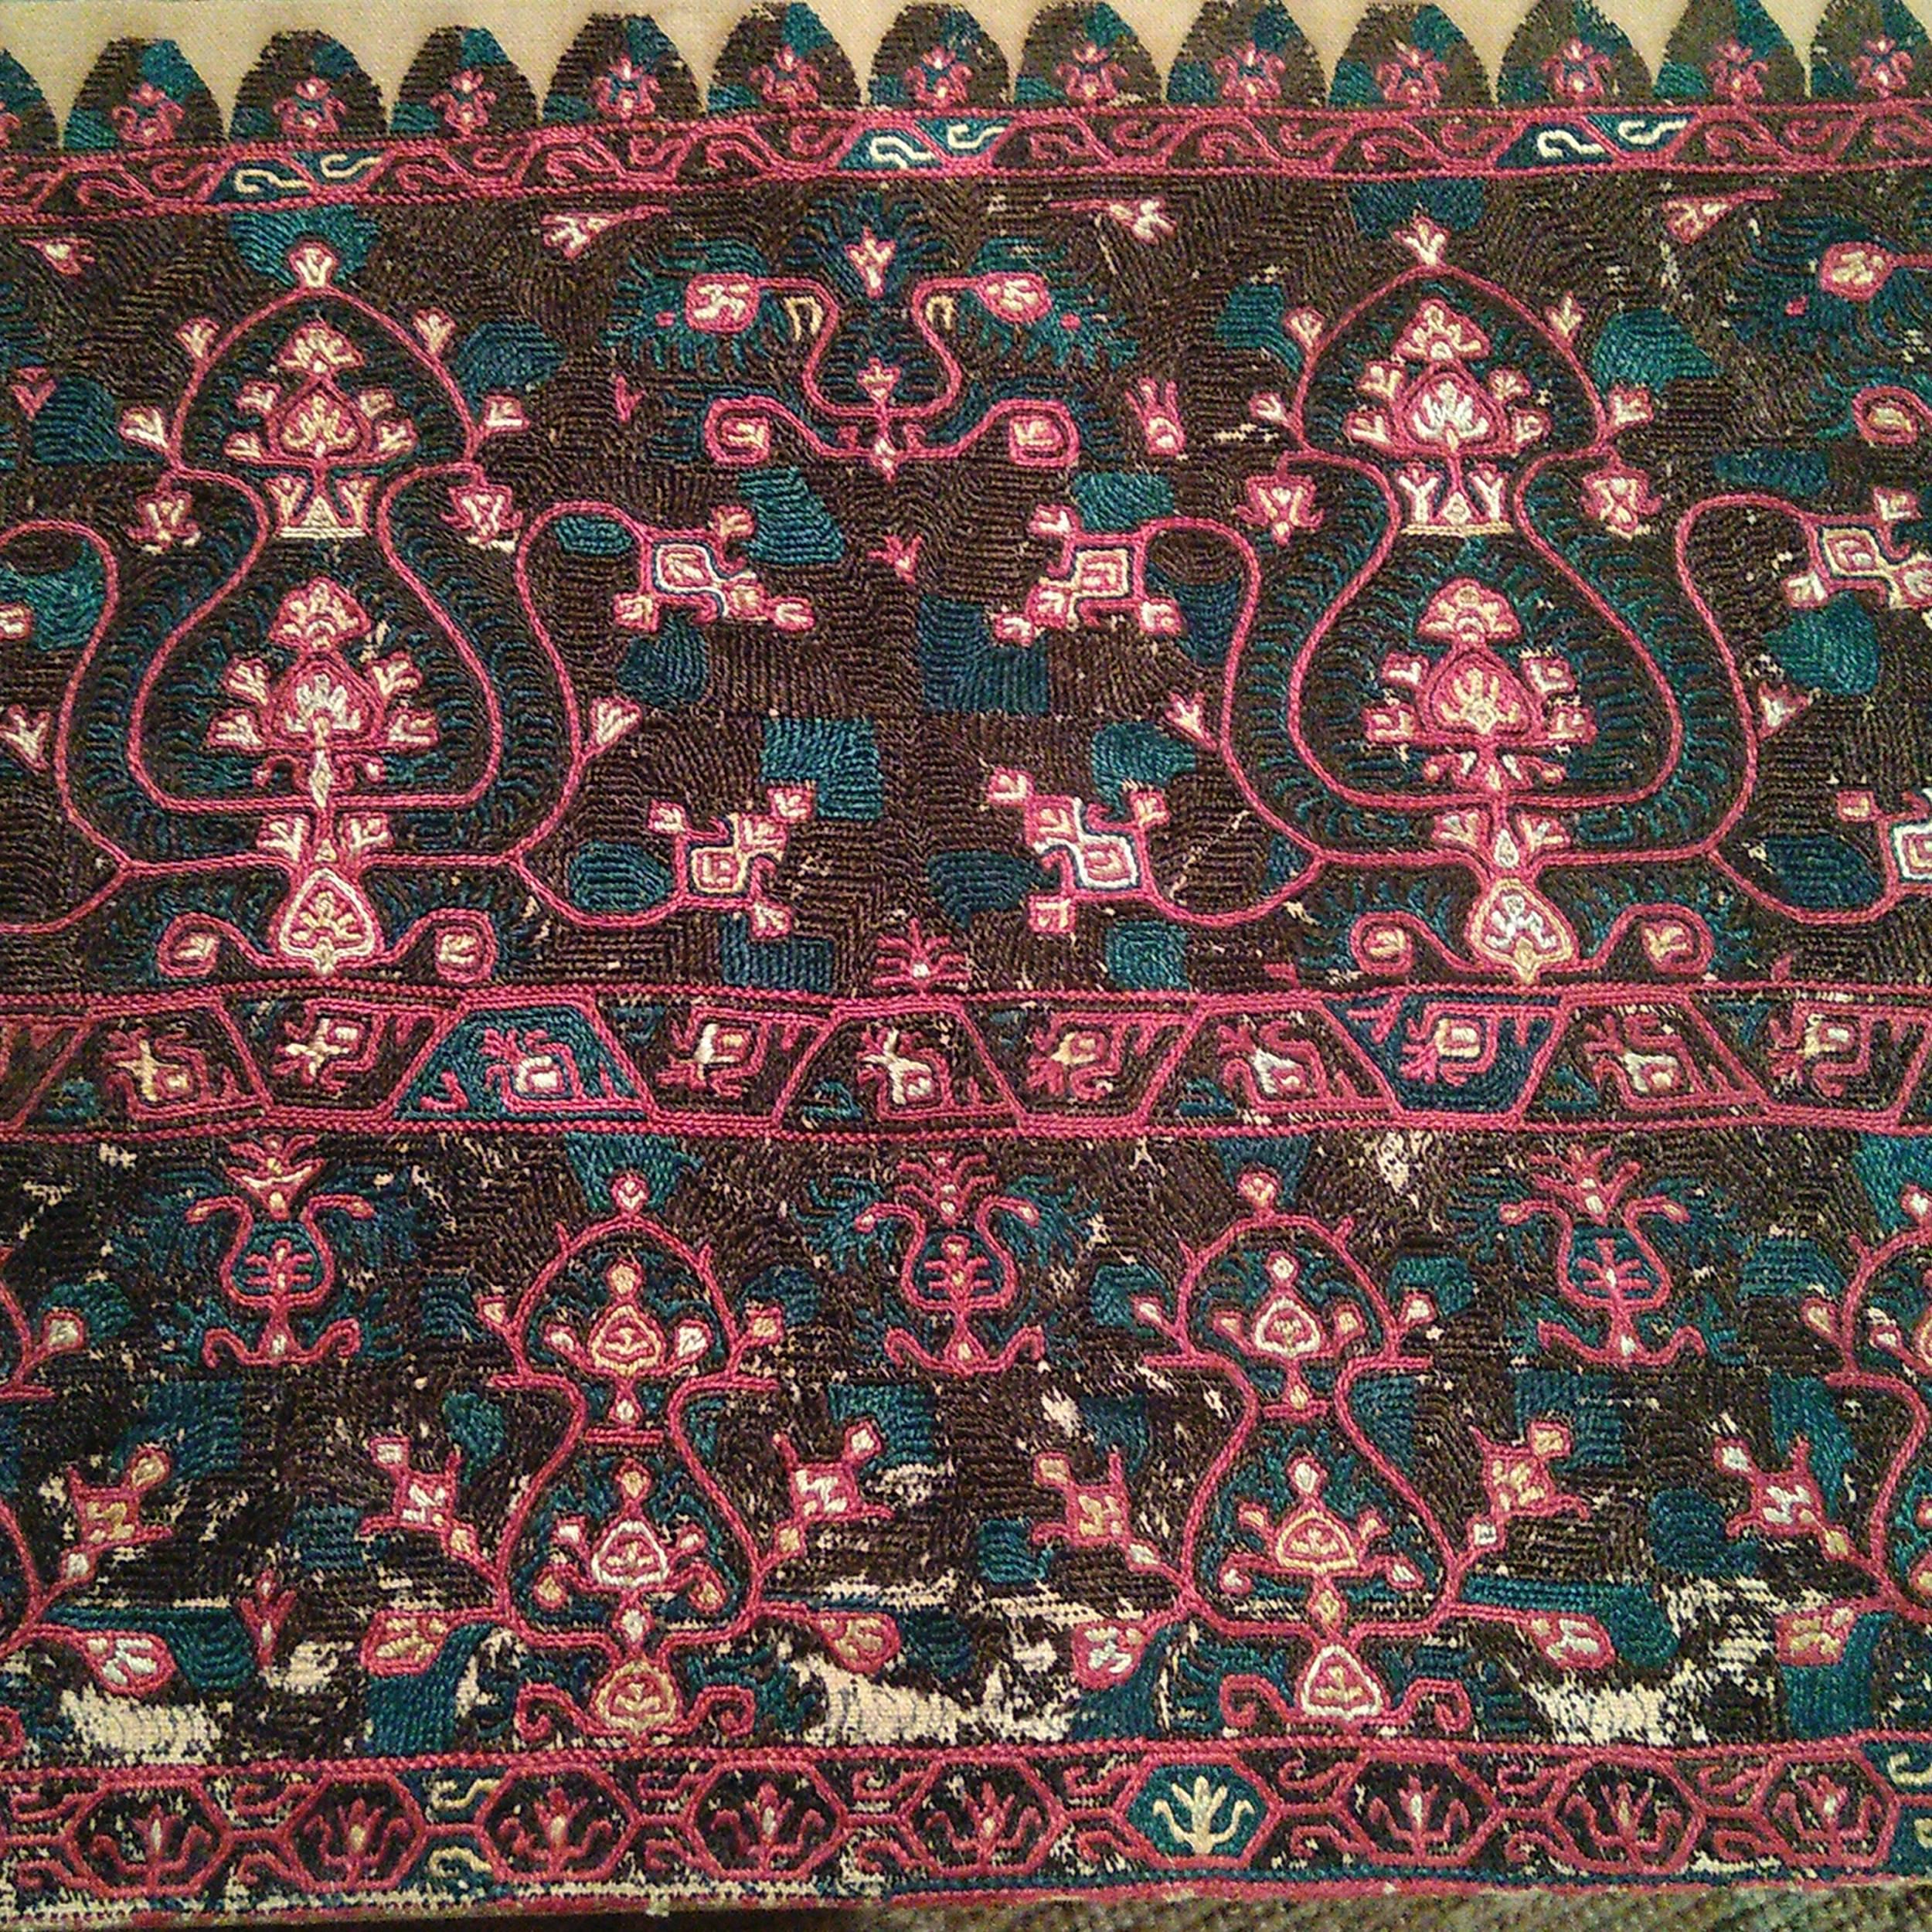 Hand-Woven Antique Greek Island Ottoman Silk Embroidery